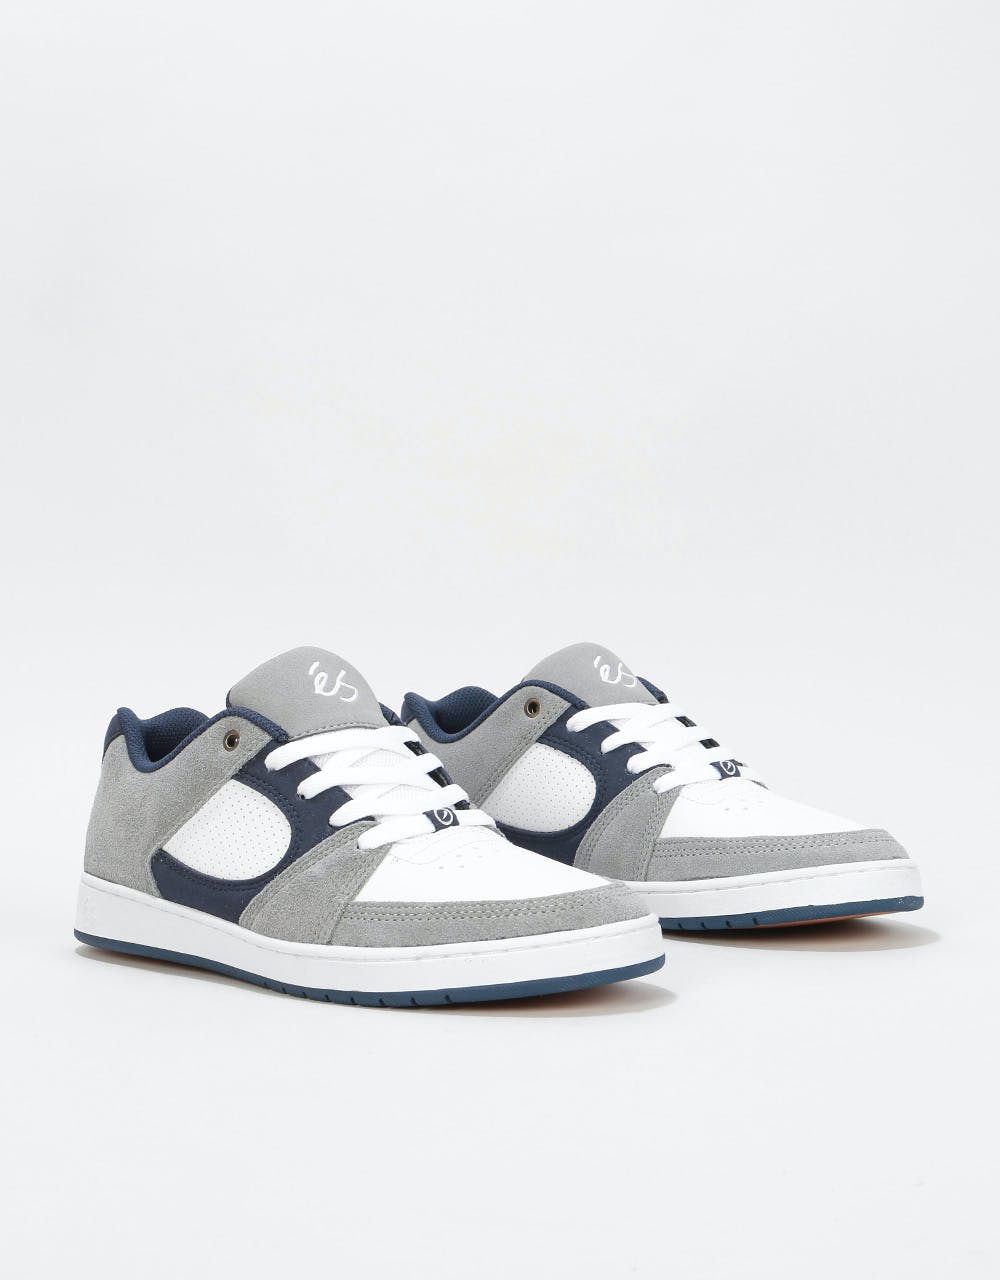 éS Accel Slim Skate Shoes - Grey/White/Navy